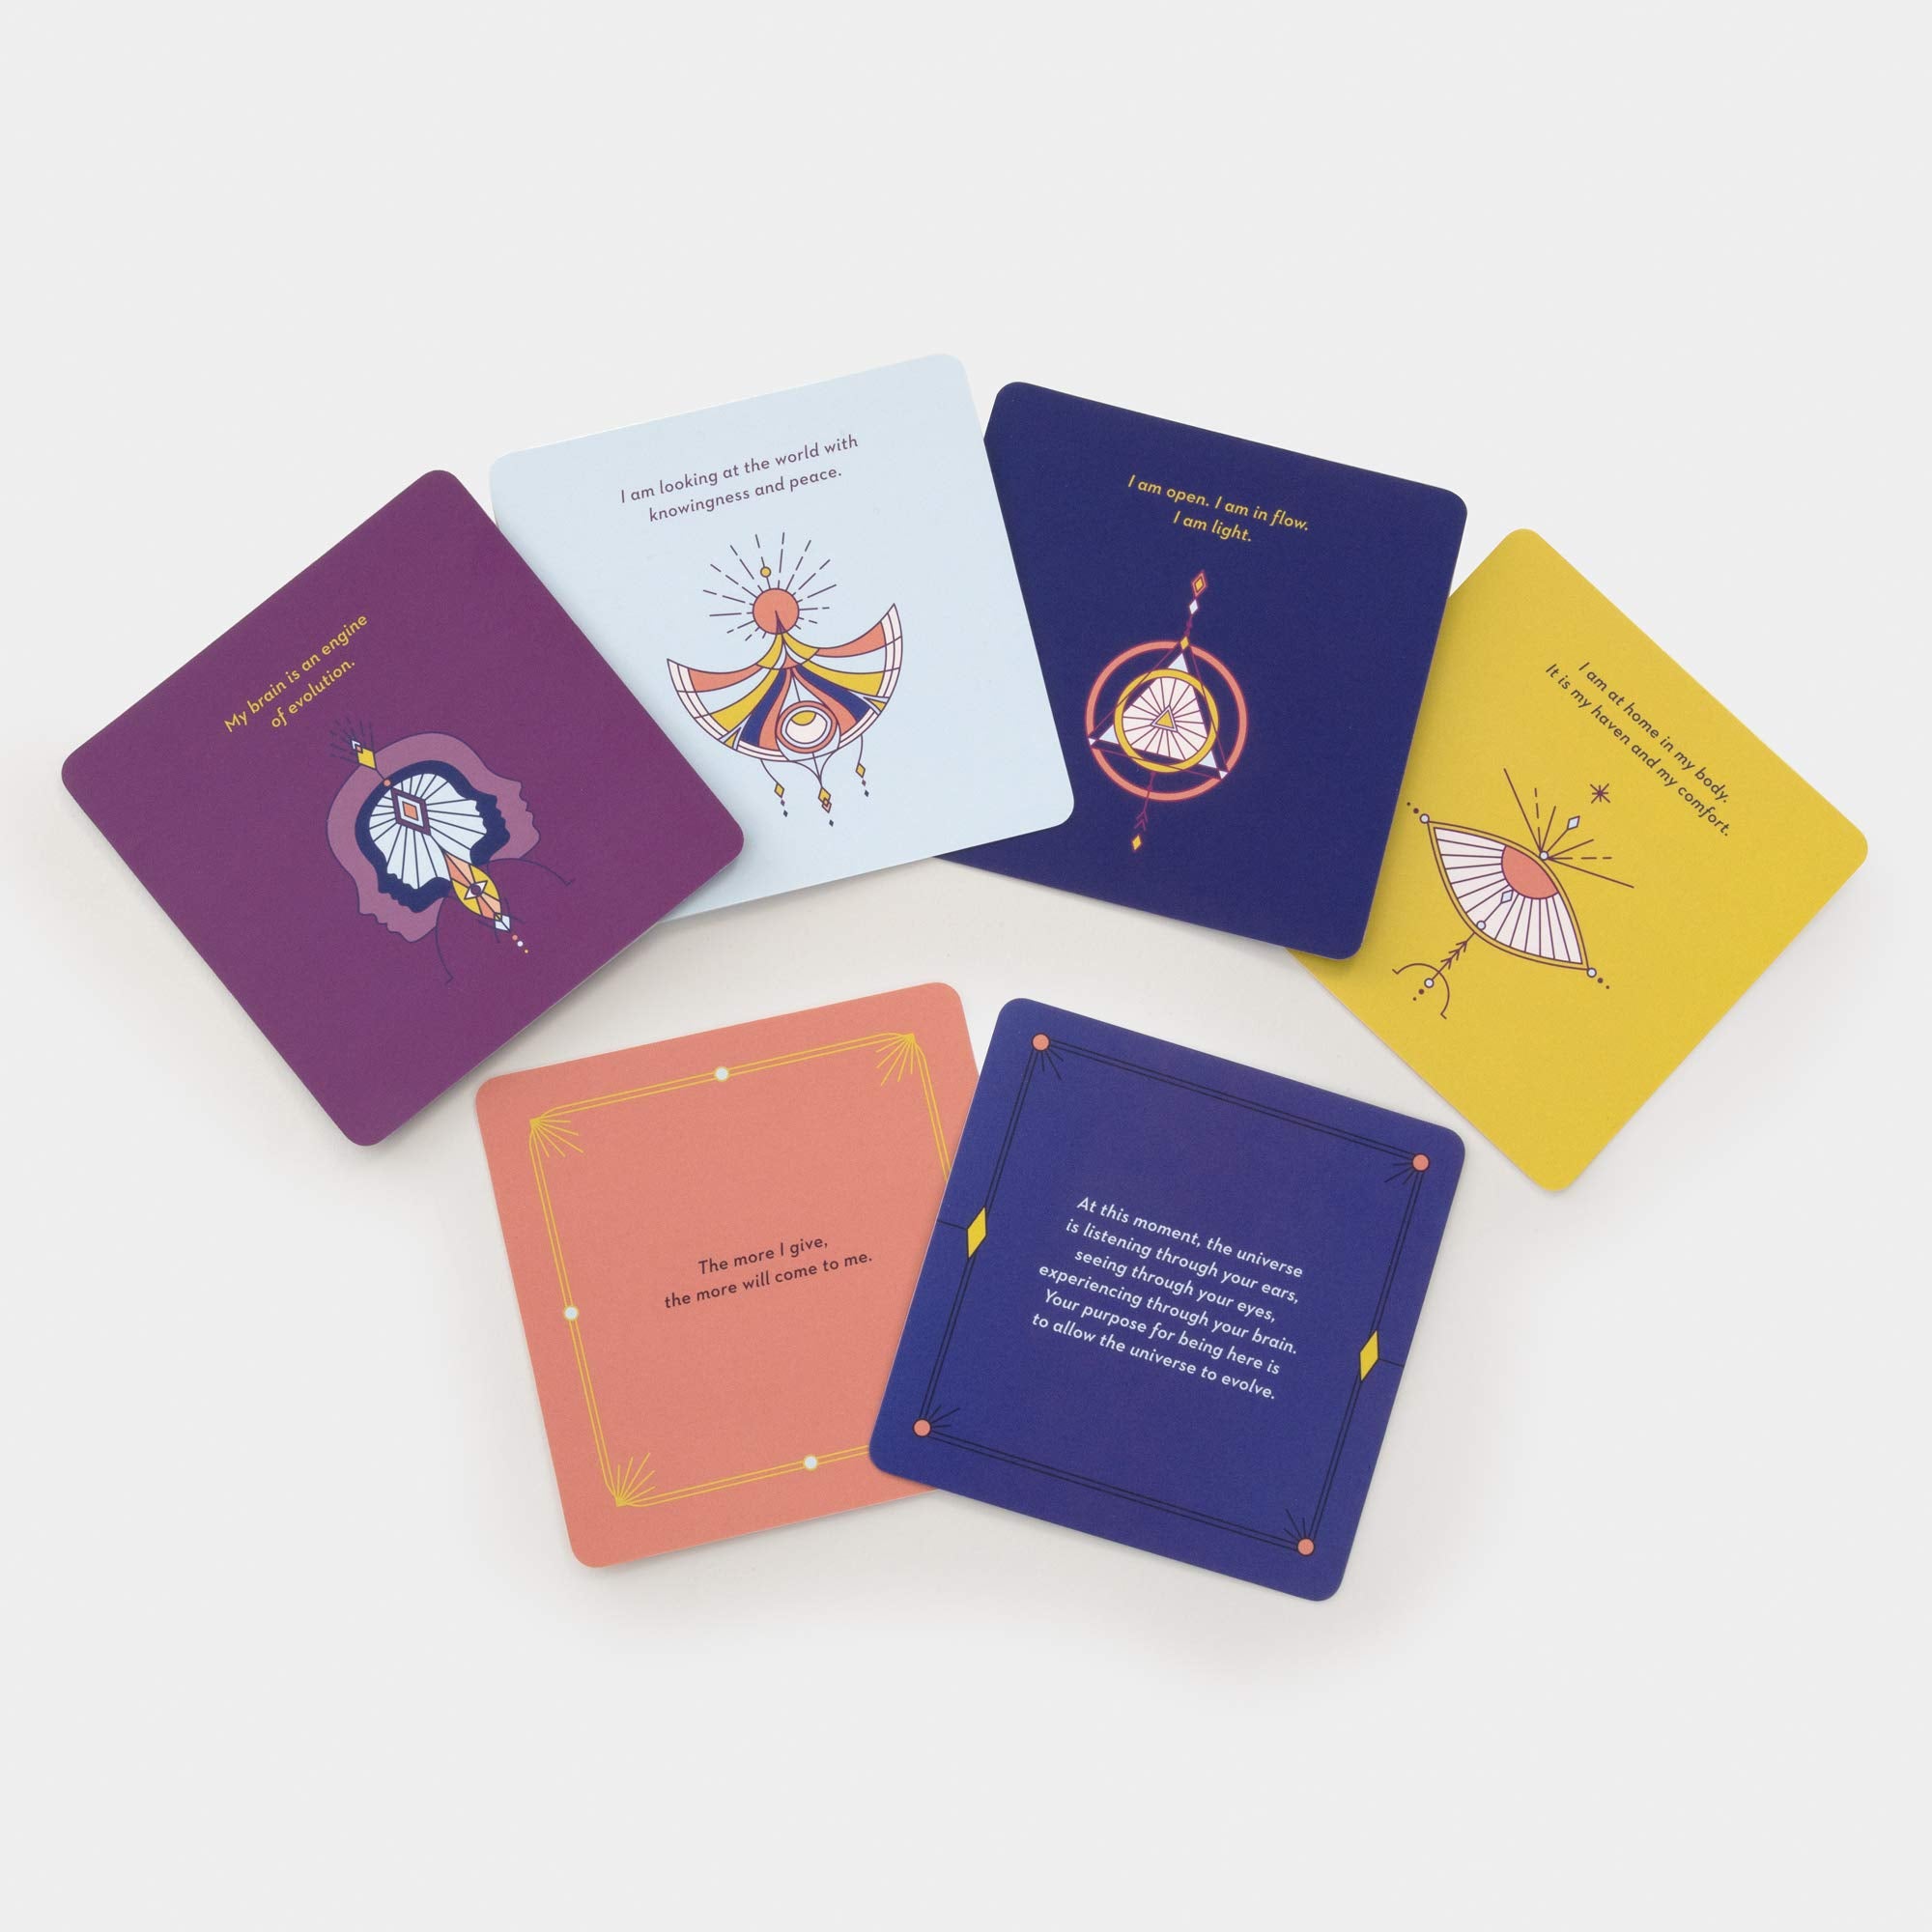 Meditations and Affirmations: 64 Cards to Awaken Your Spirit || Deepak Chopra